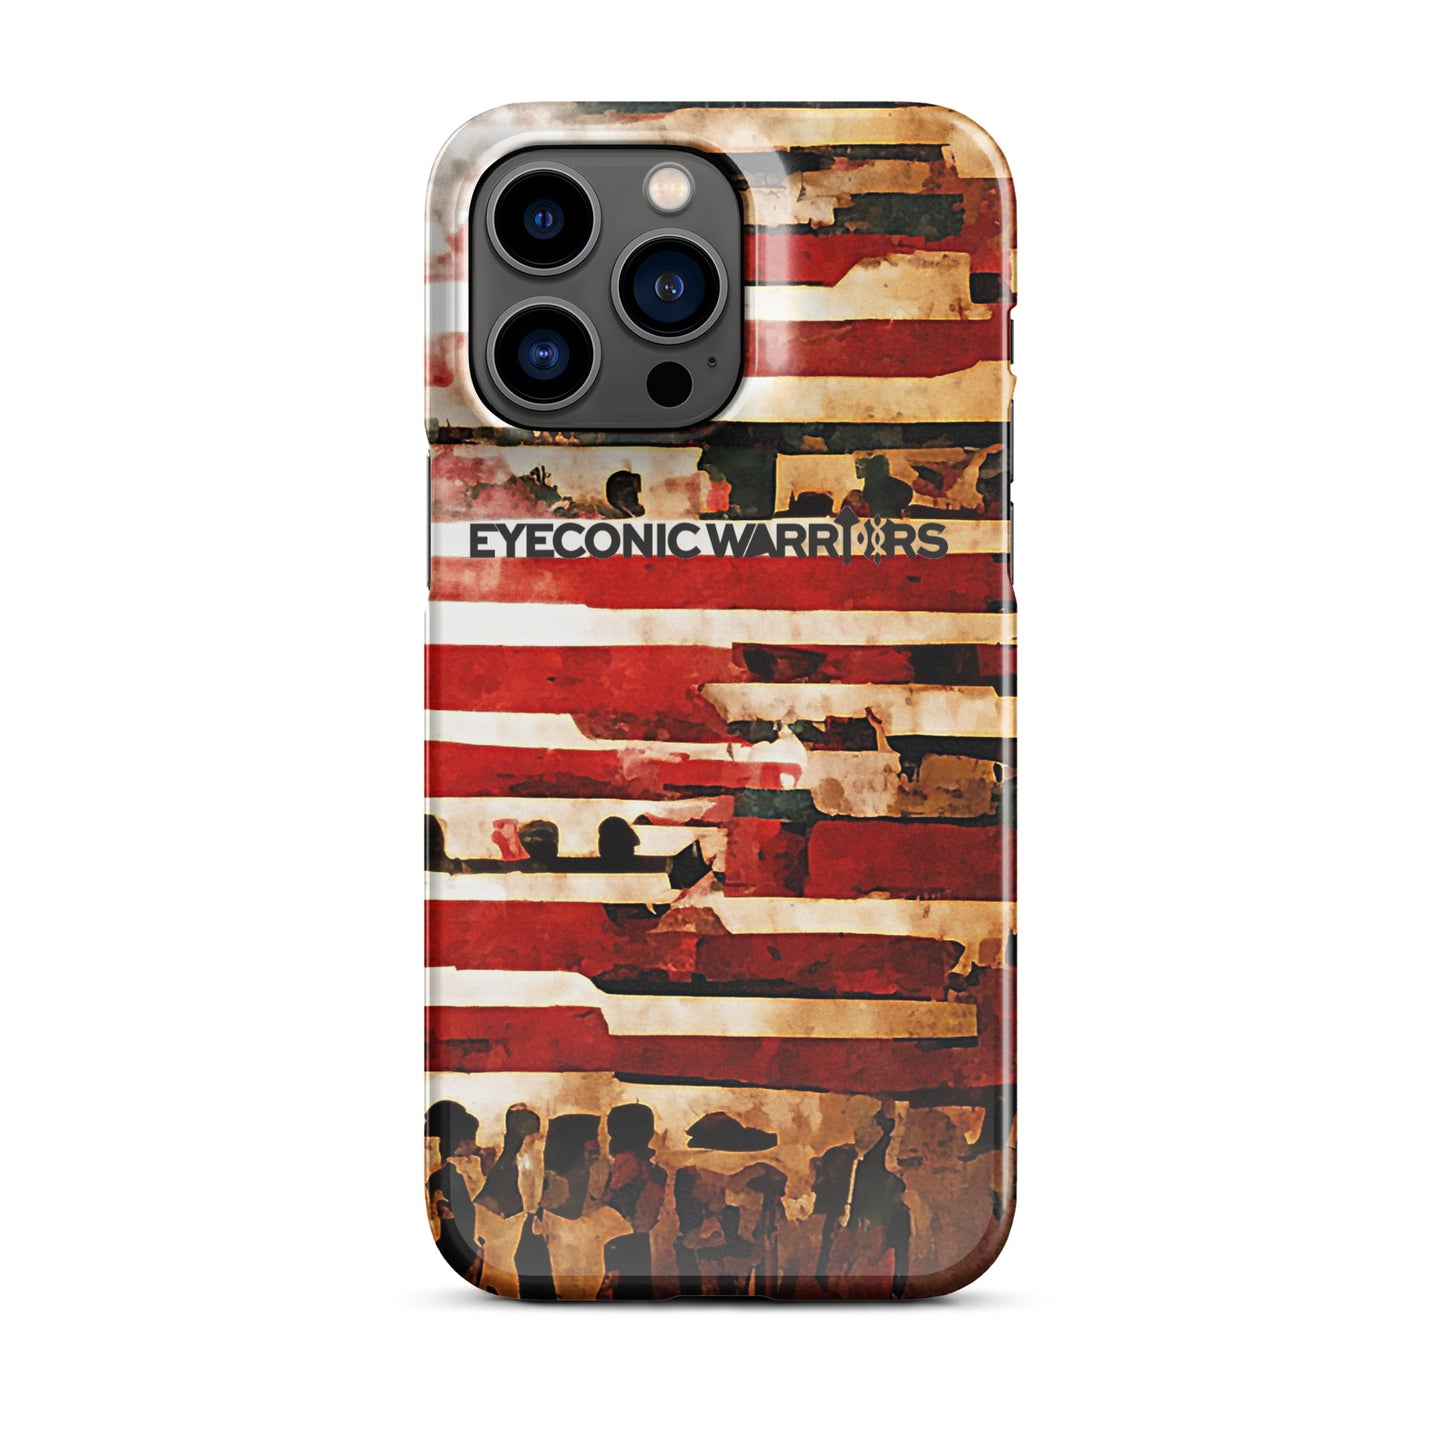 Fabric of America Custom iPhone Case - Art for Change